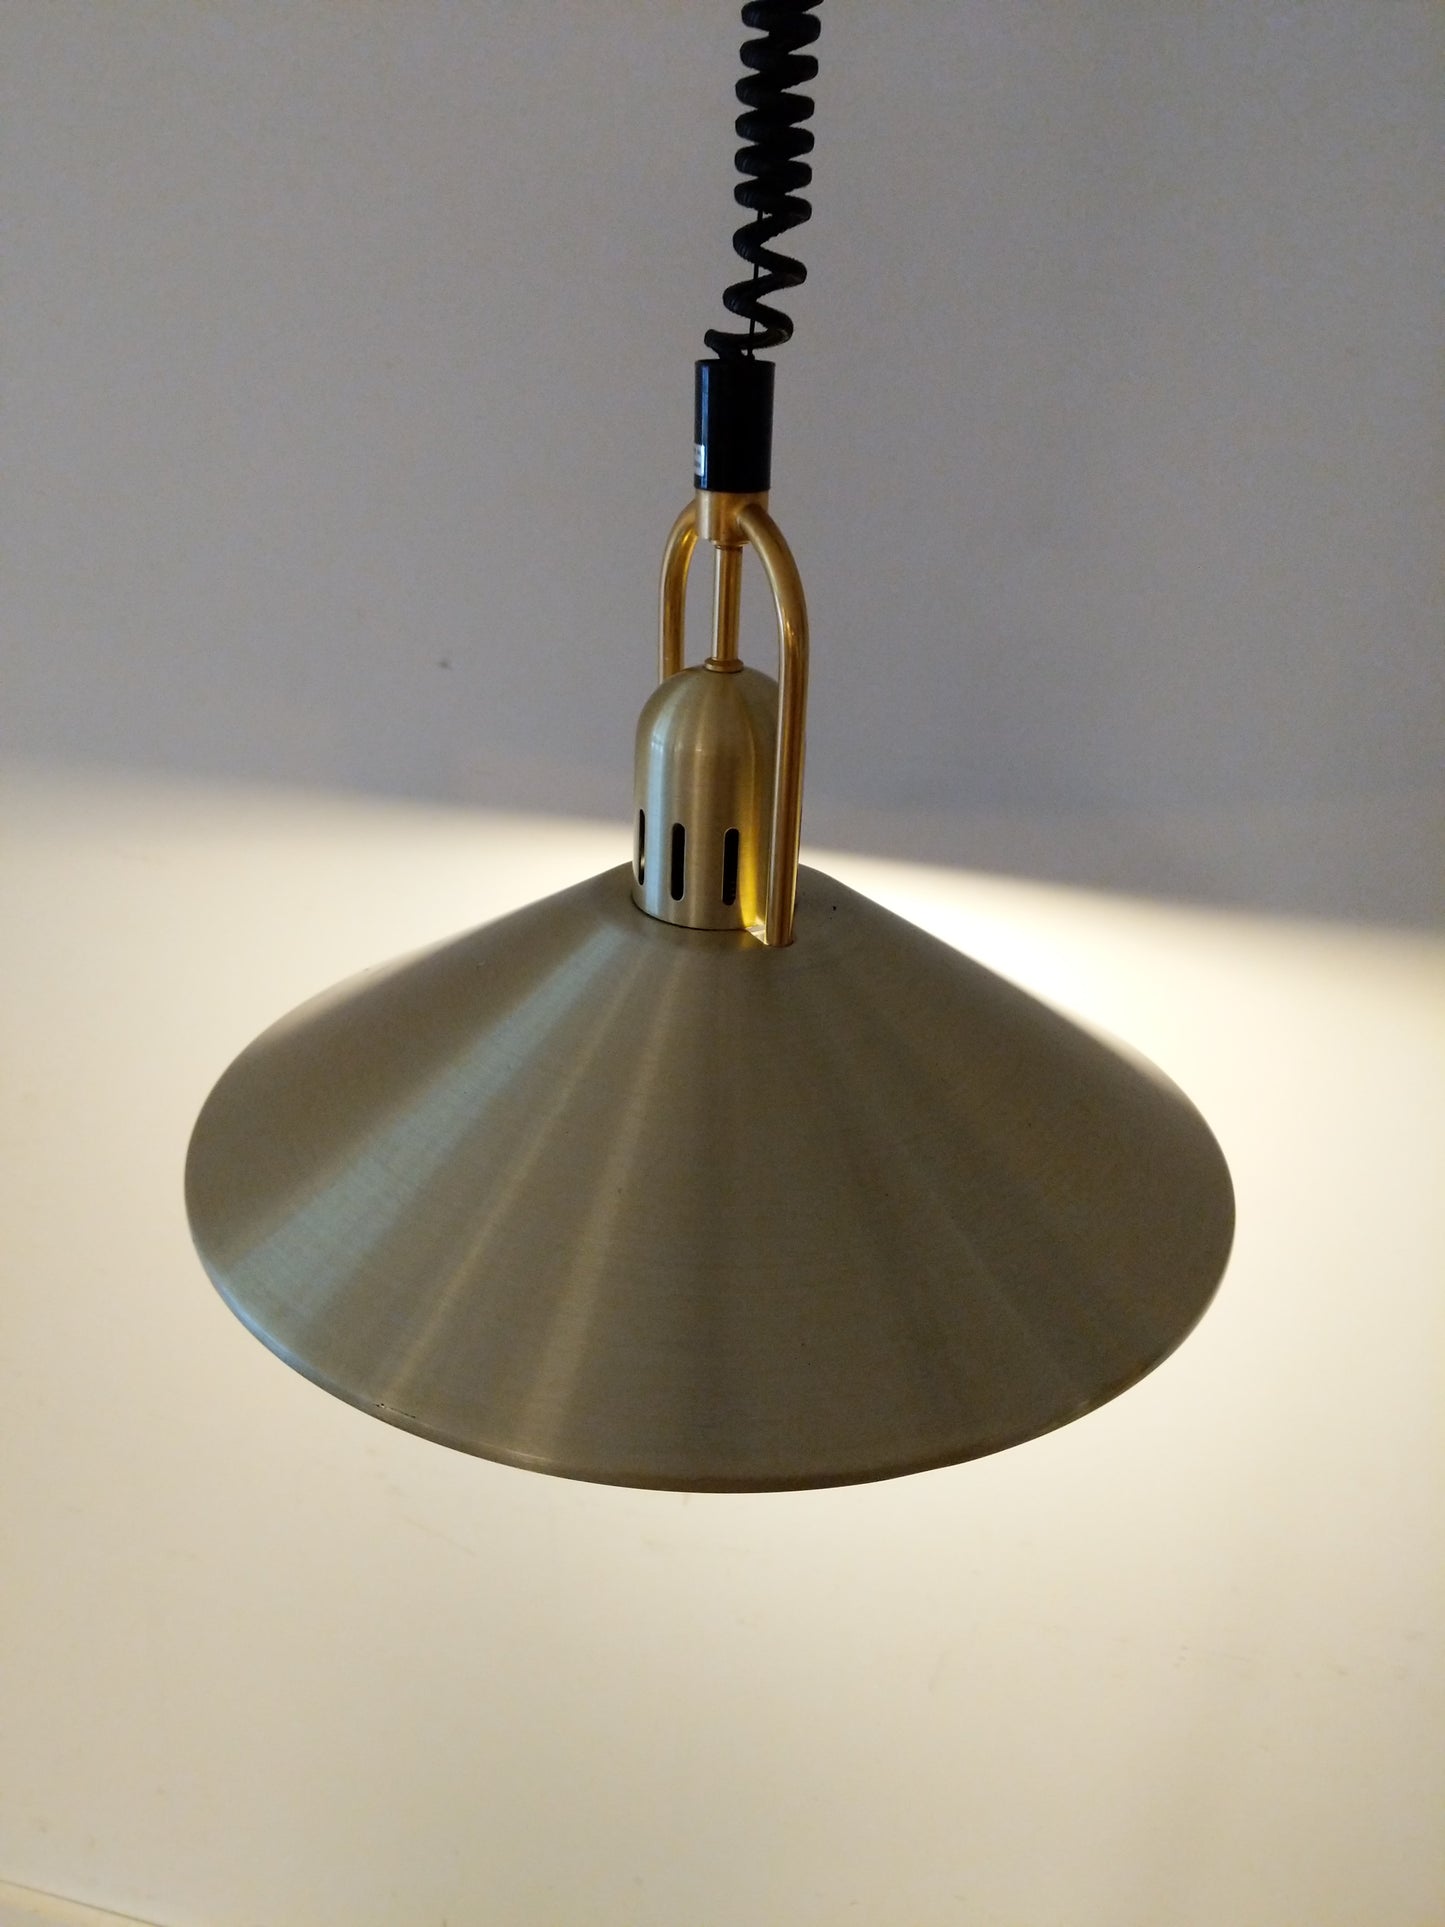 Vintage Swedish Modern Lamp by Belid